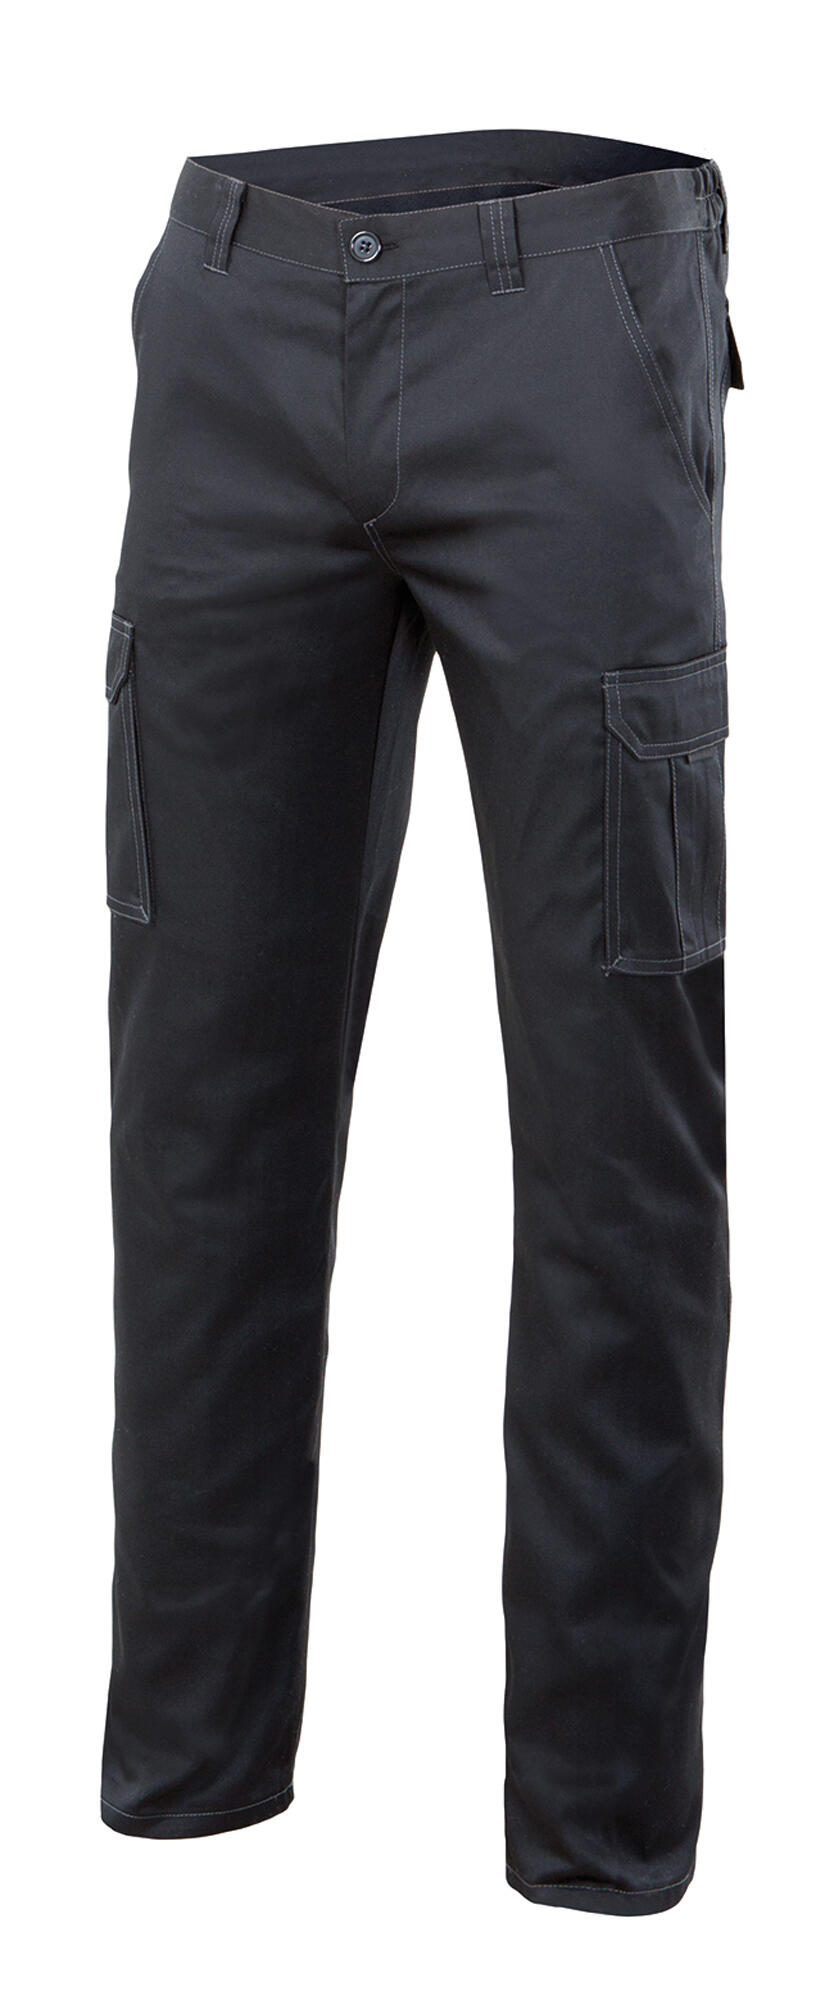 Pantalon de trabajo multibolsillo stretch negro t34